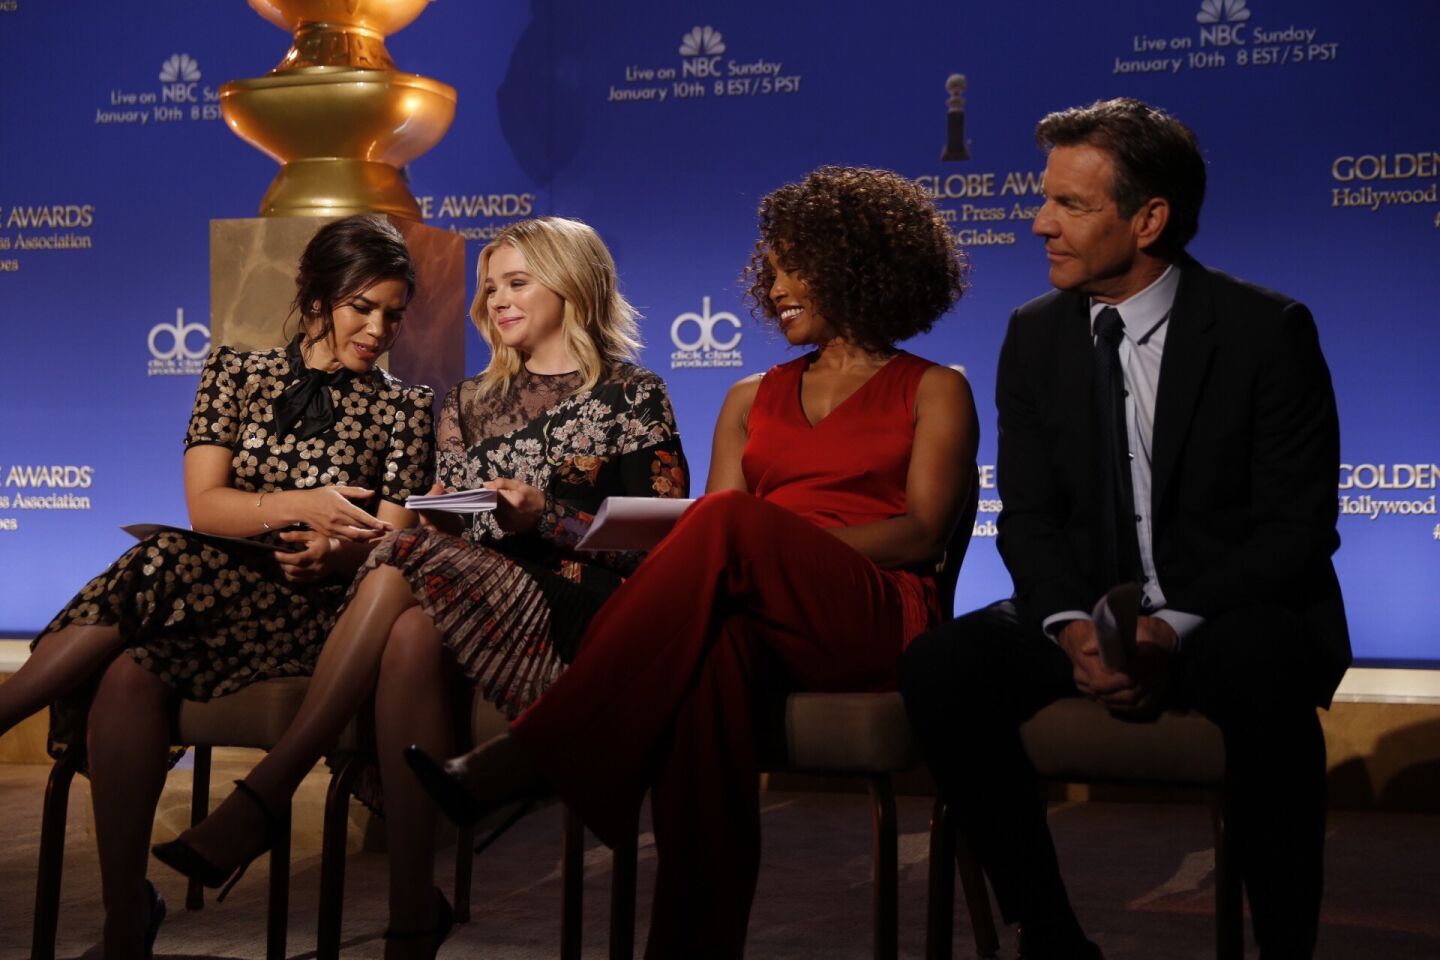 Golden Globes nominations